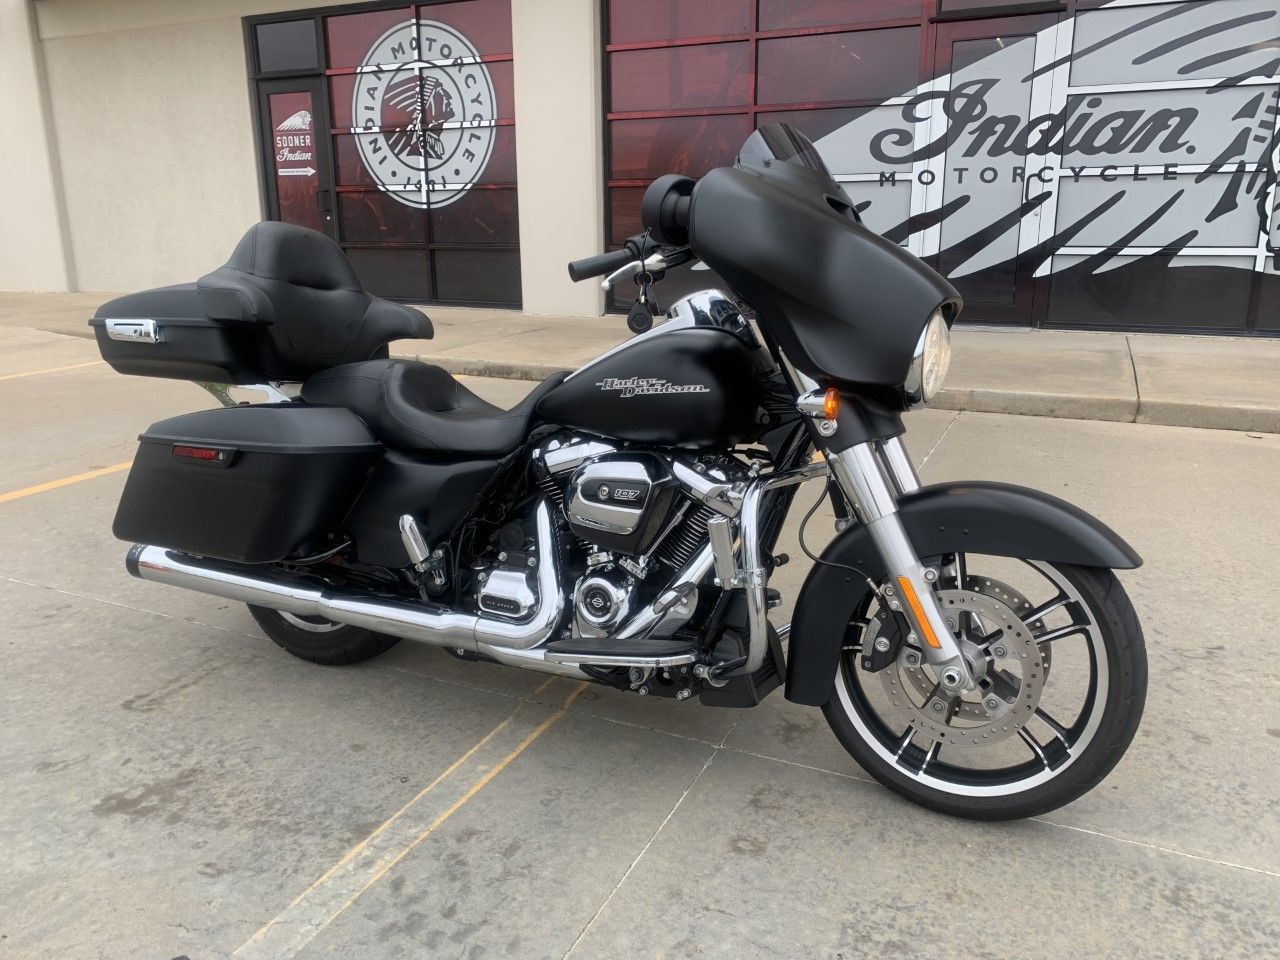 2017 Harley-Davidson Street Glide® Special in Norman, Oklahoma - Photo 2